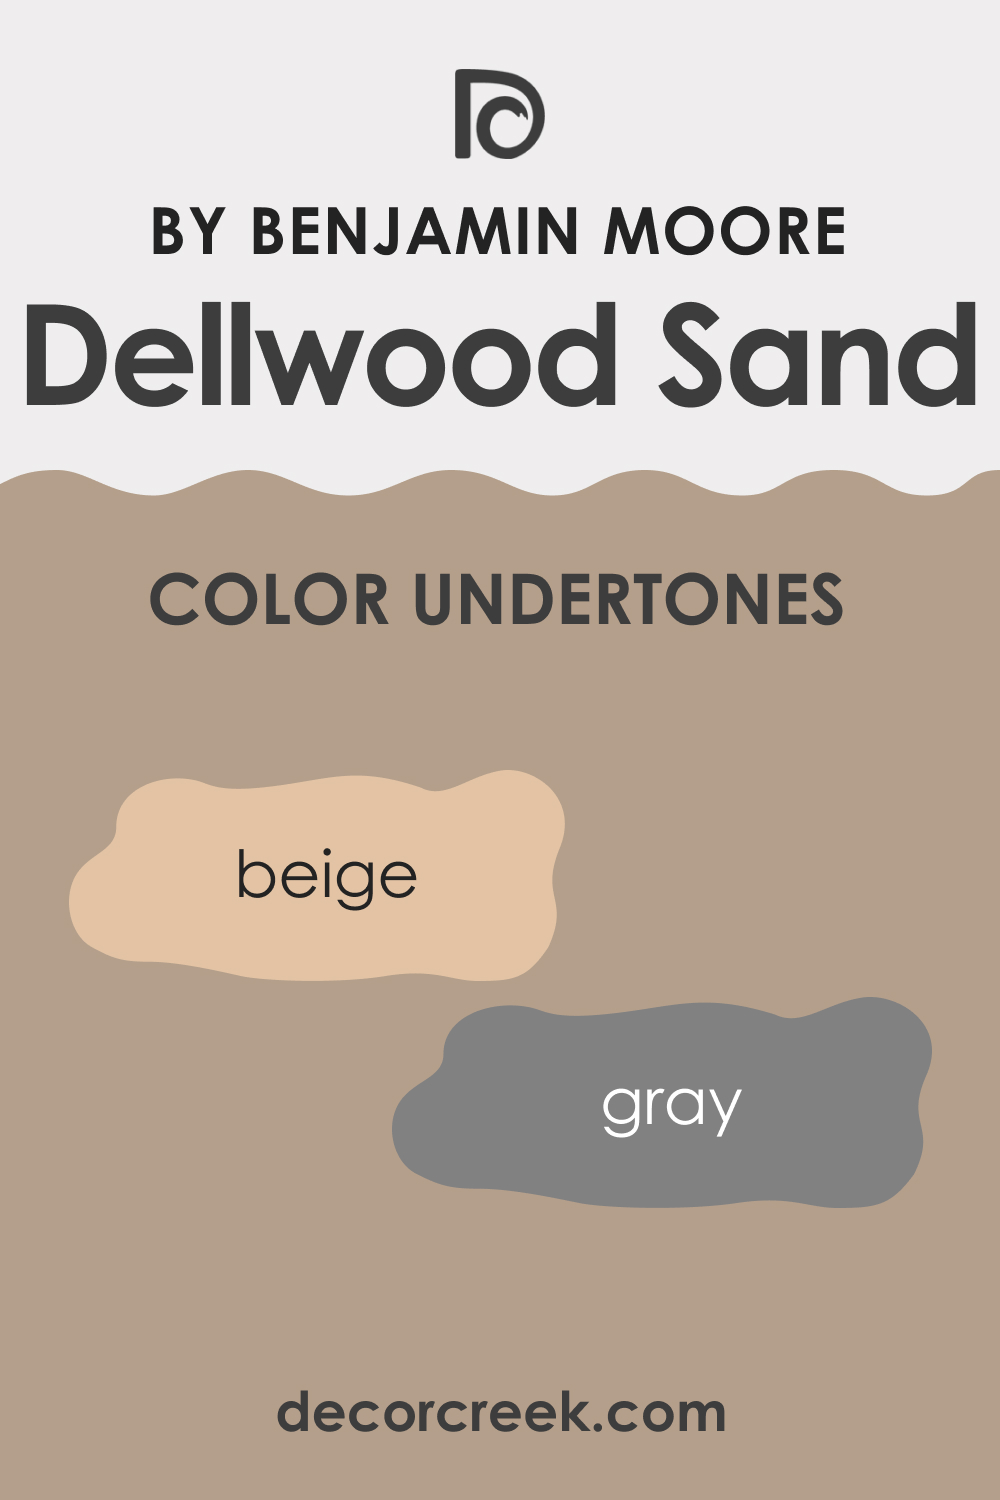 Undertones of Dellwood Sand 1019